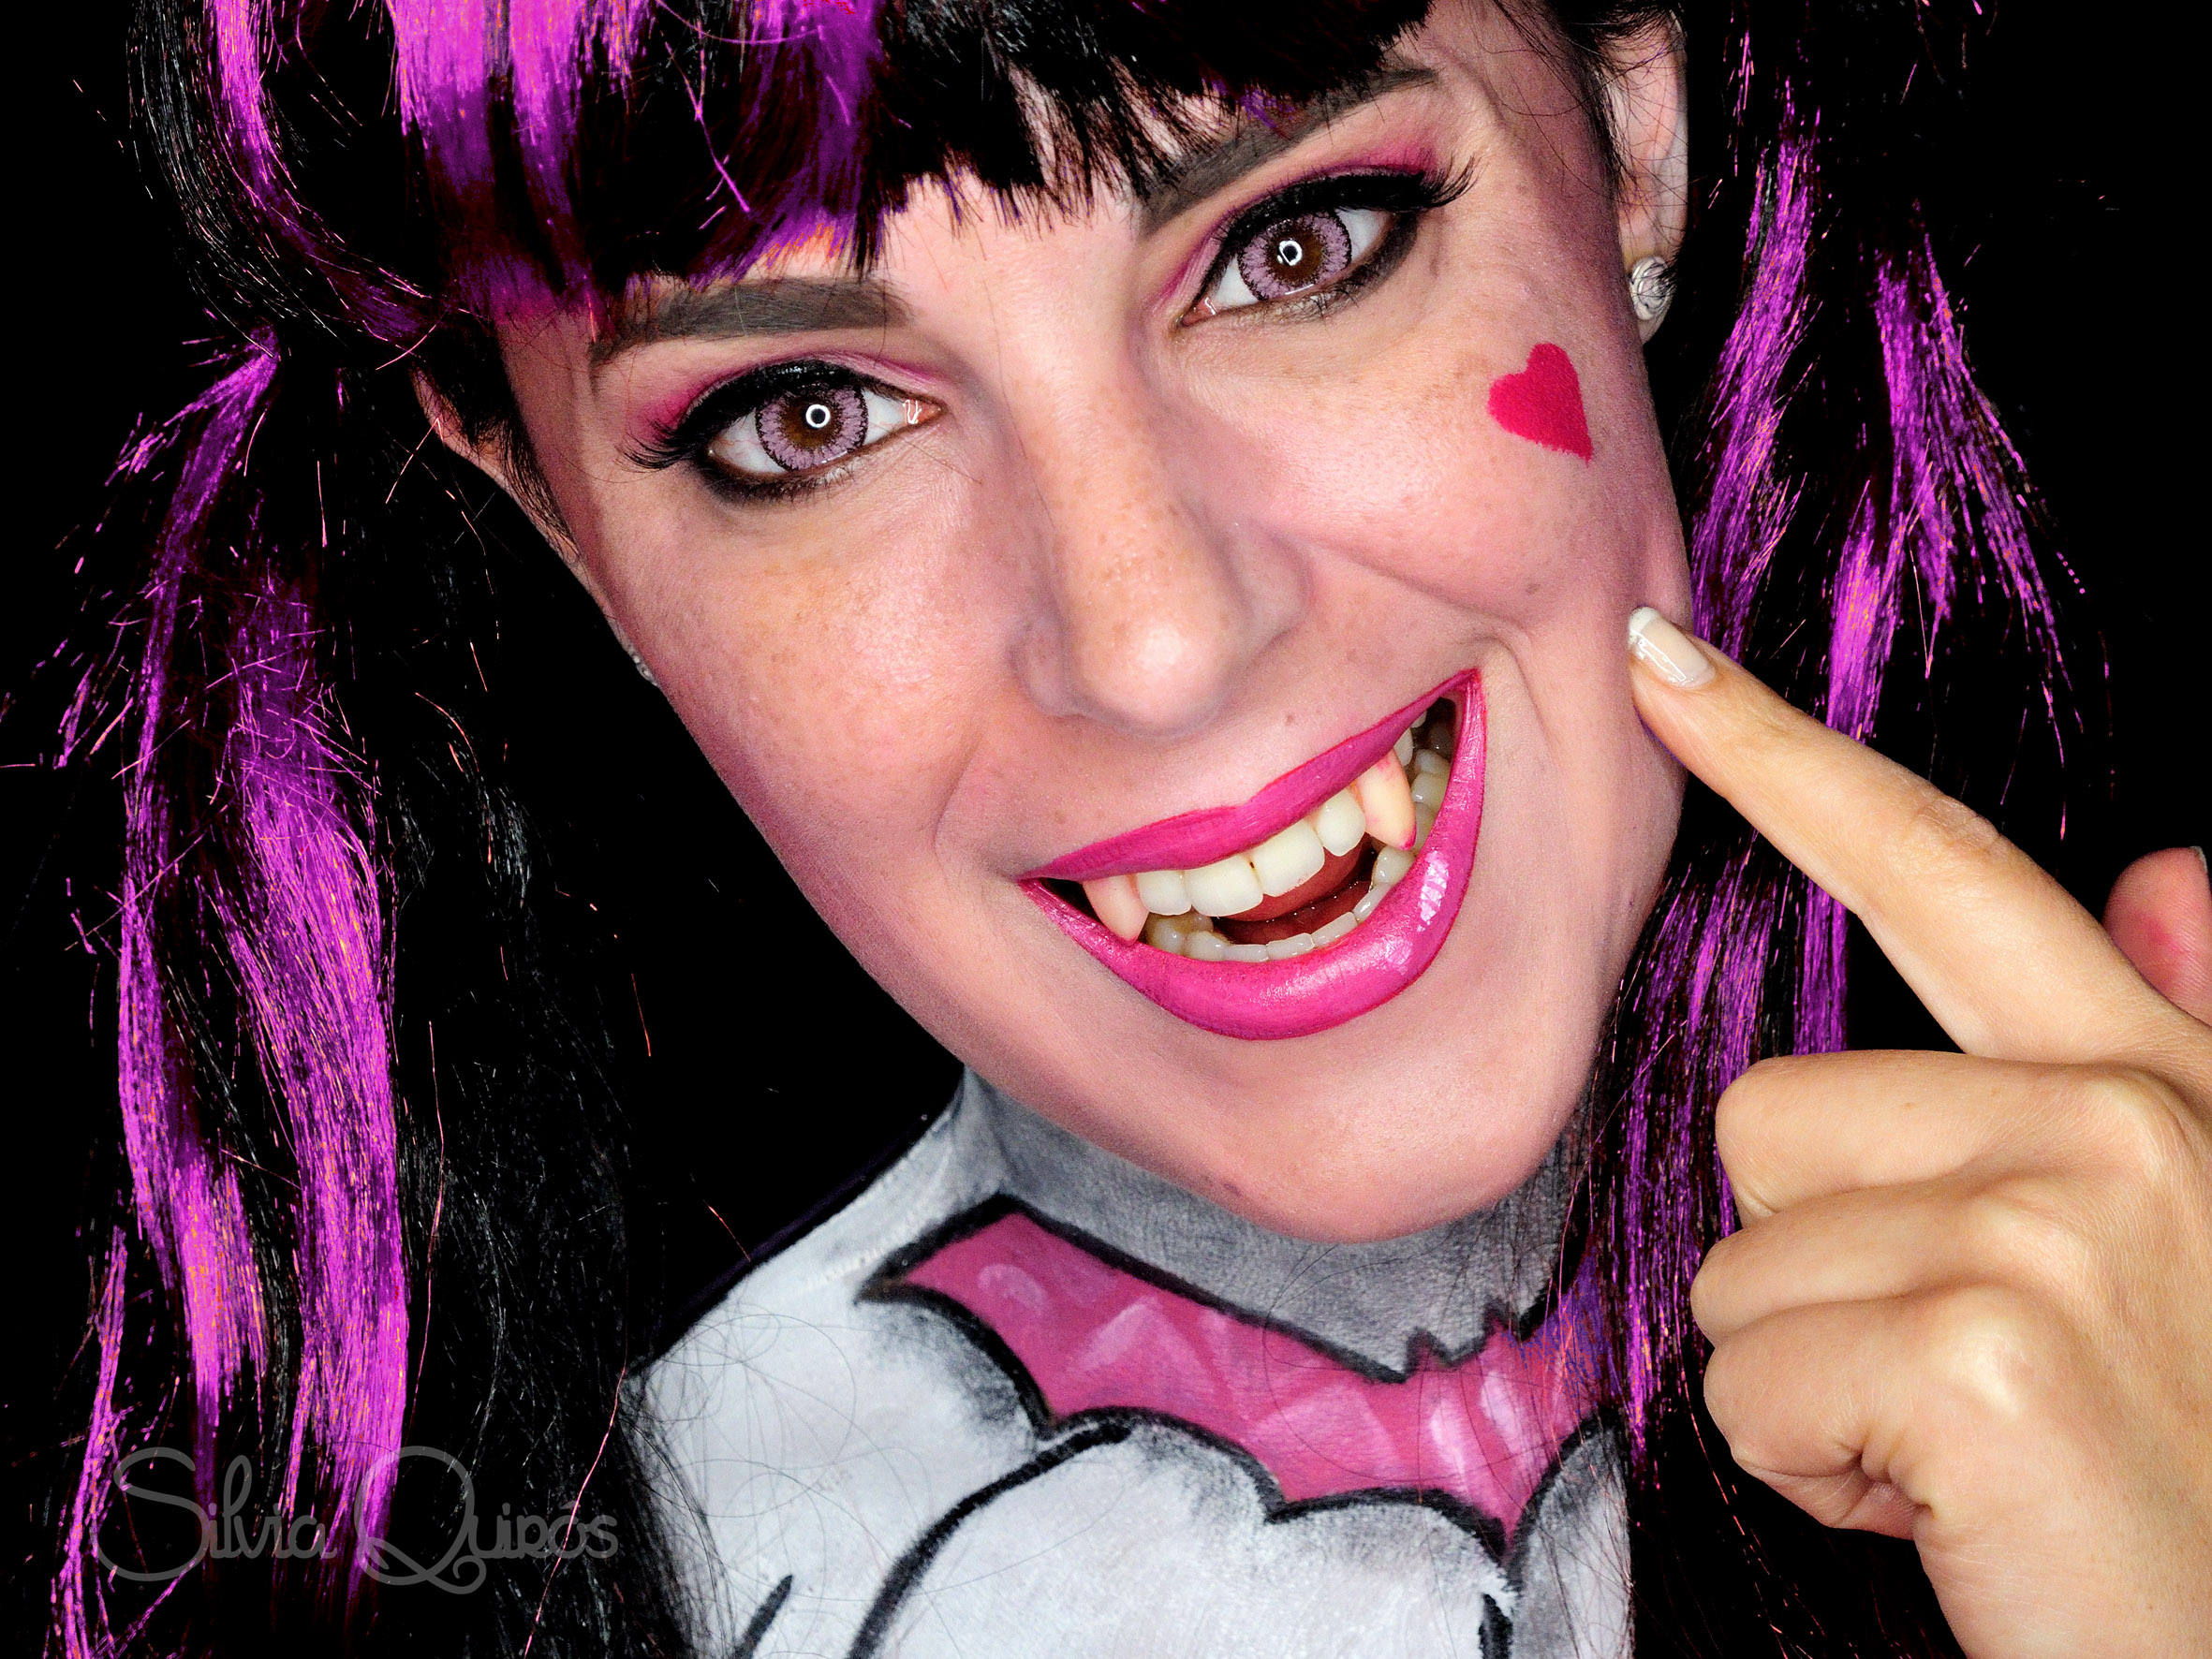 Draculaura de Monster High maquillaje - Silvia Quirós